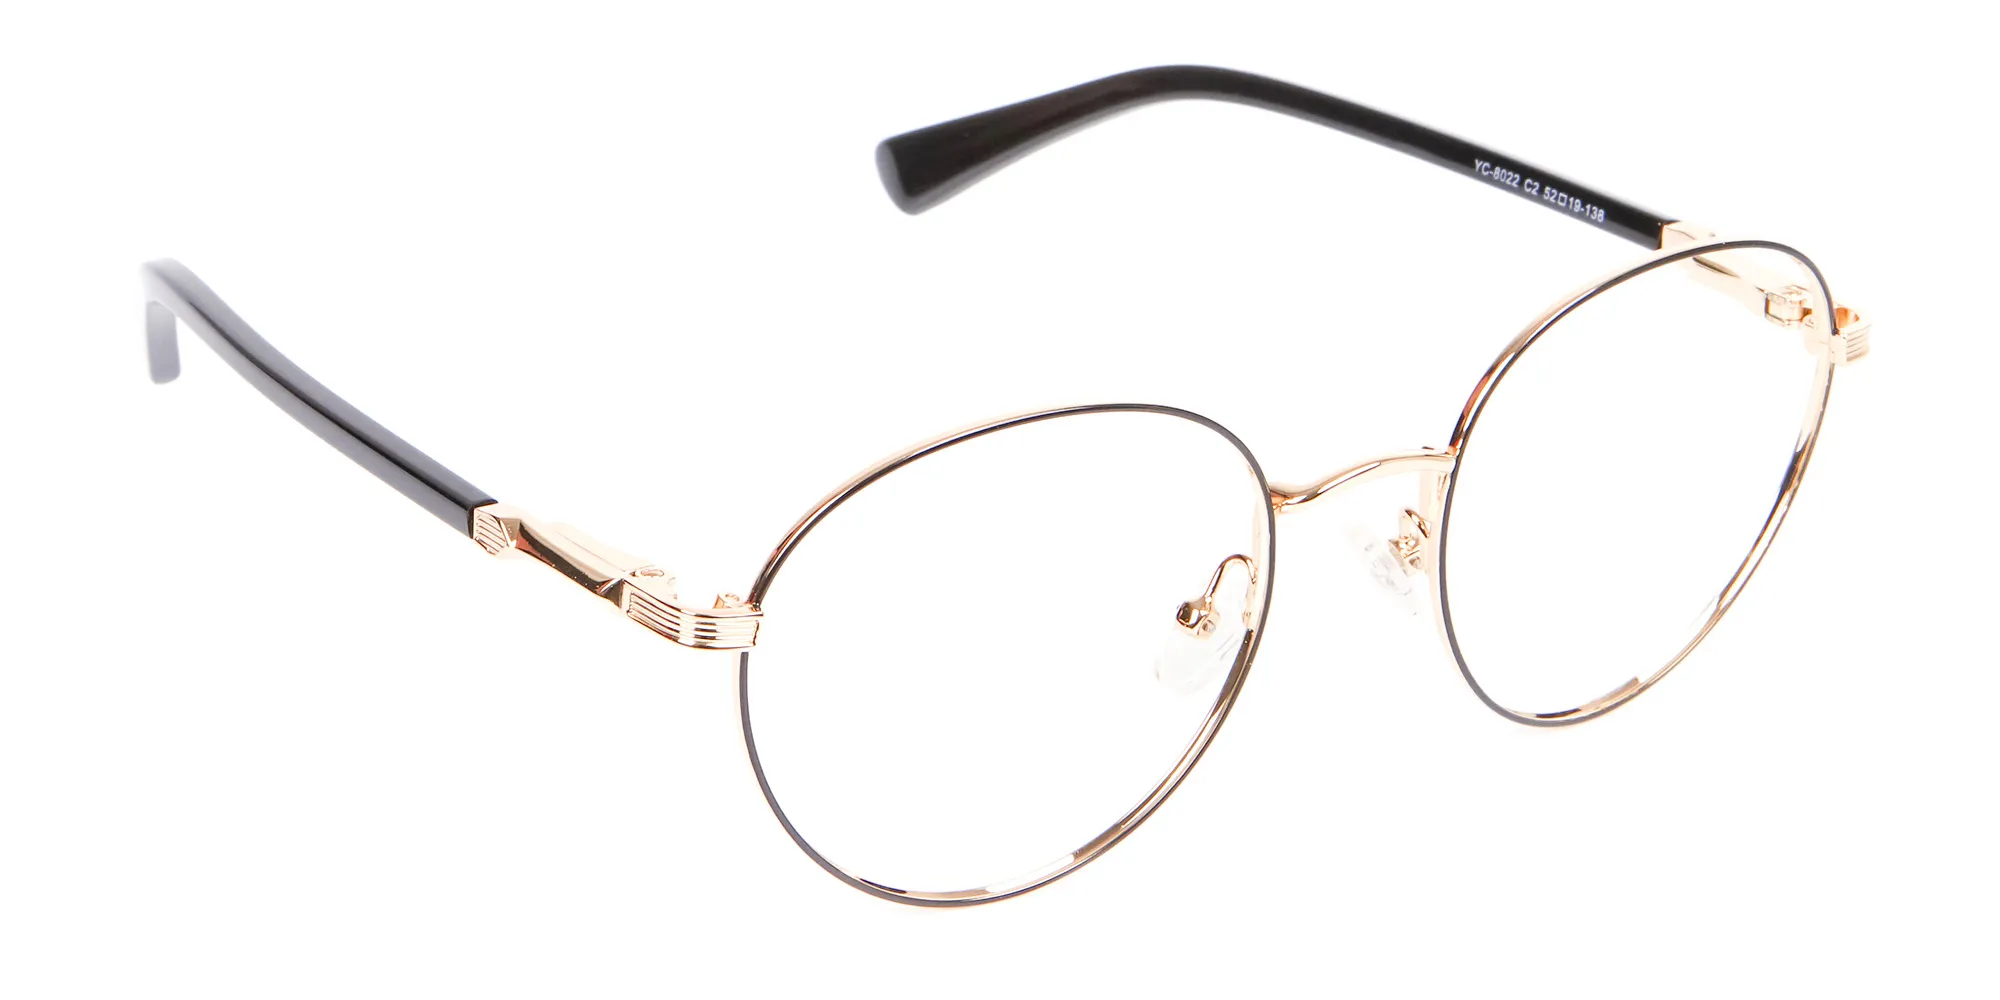 Round Gold Metal Eyeglasses Frame - 2